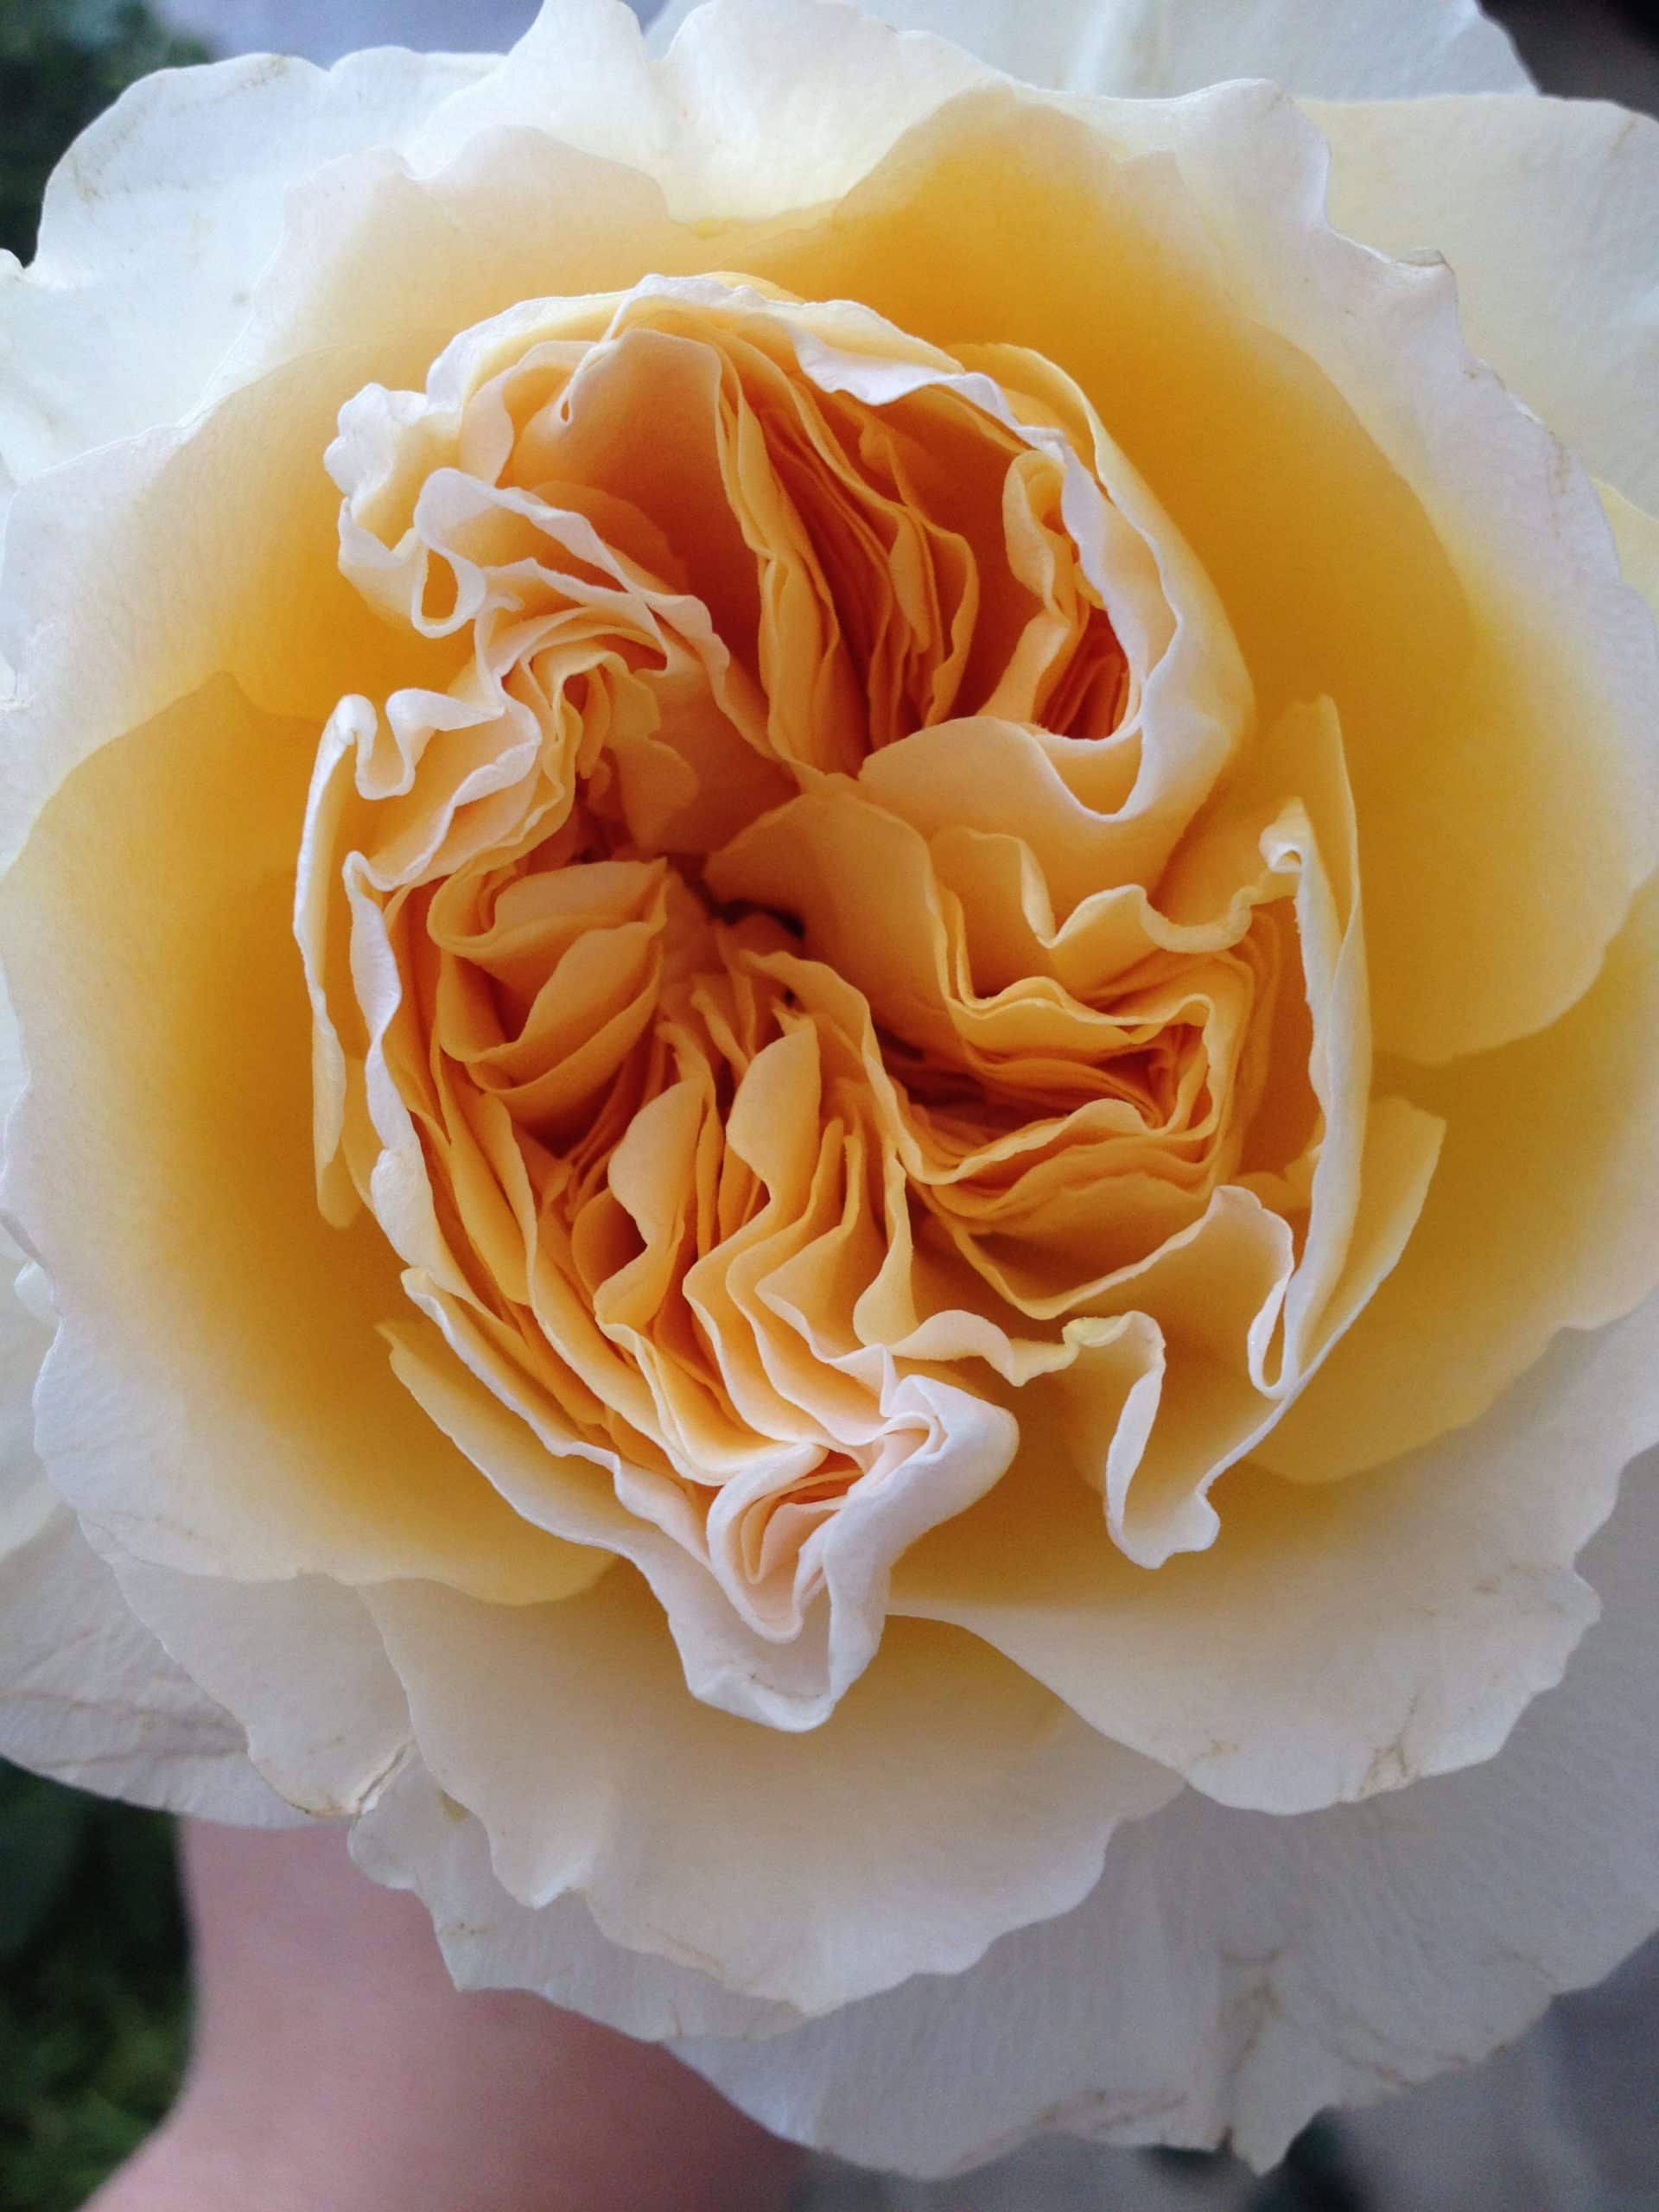 Peony alternatives for your wedding – Beatrice Garden rose